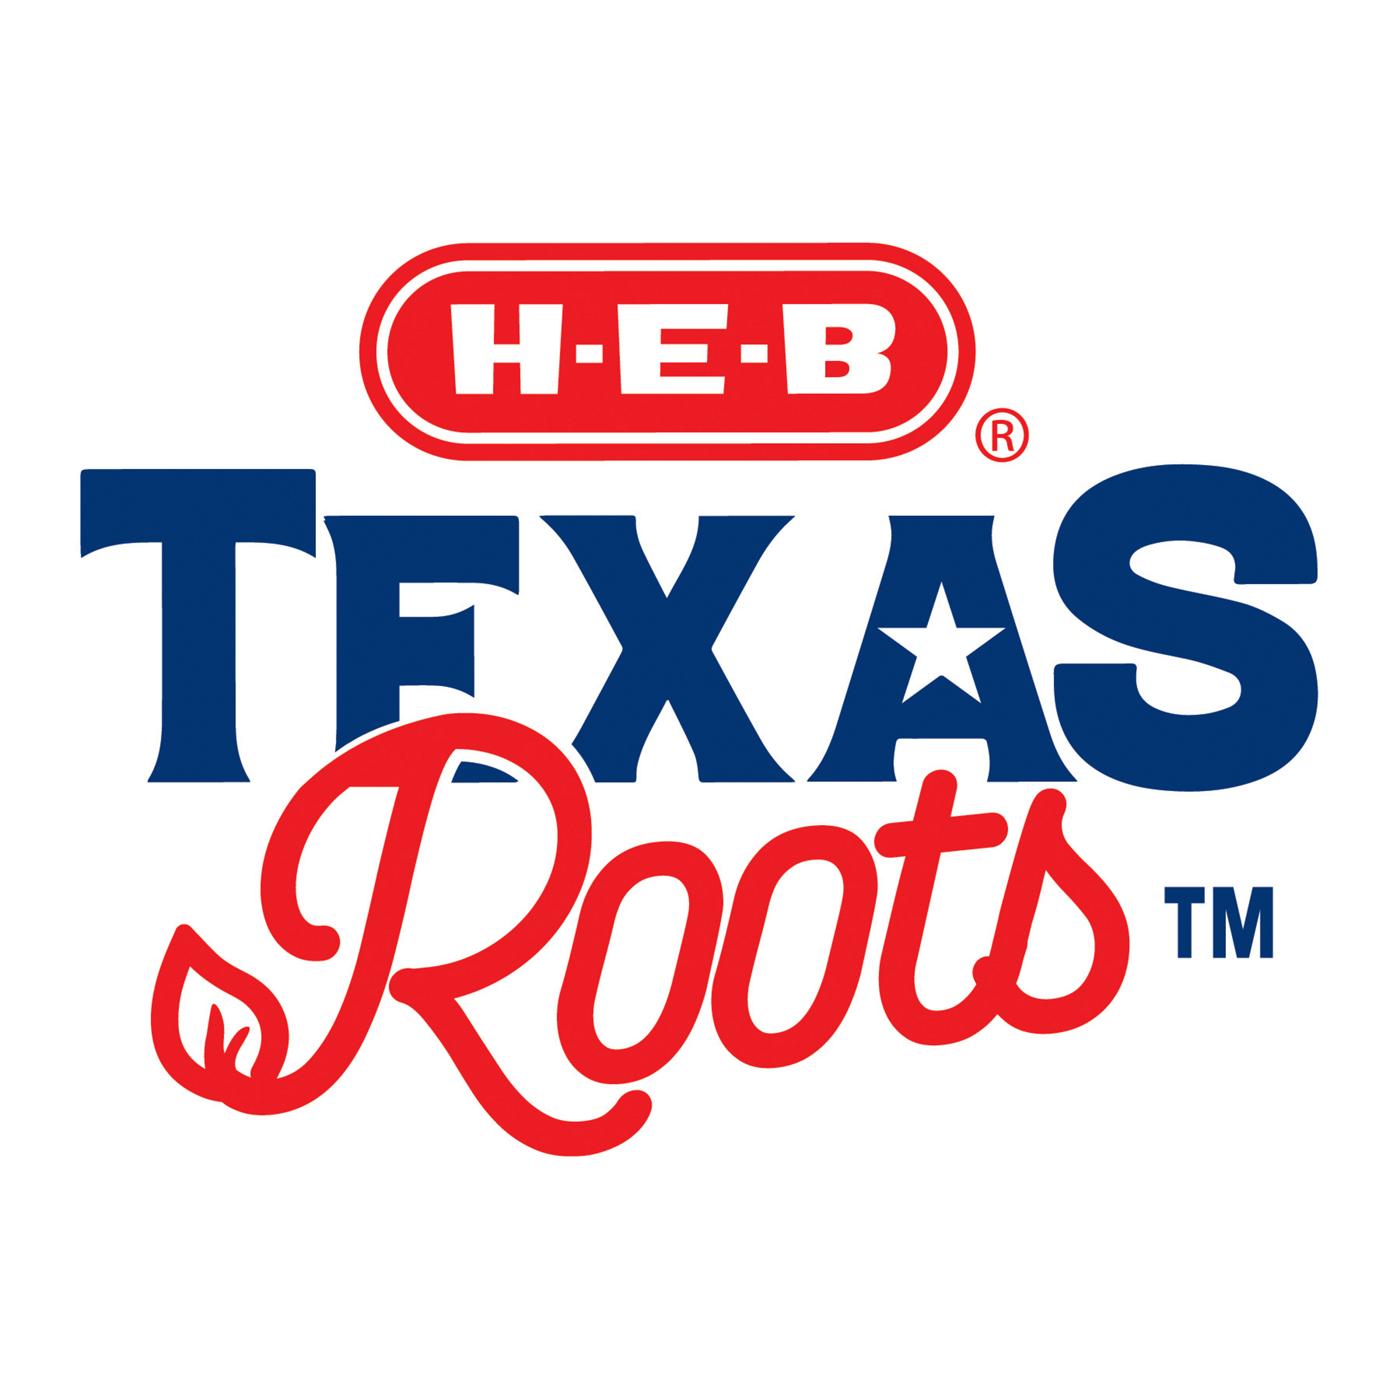 H-E-B Texas Roots Jalapeno Pepper; image 2 of 2